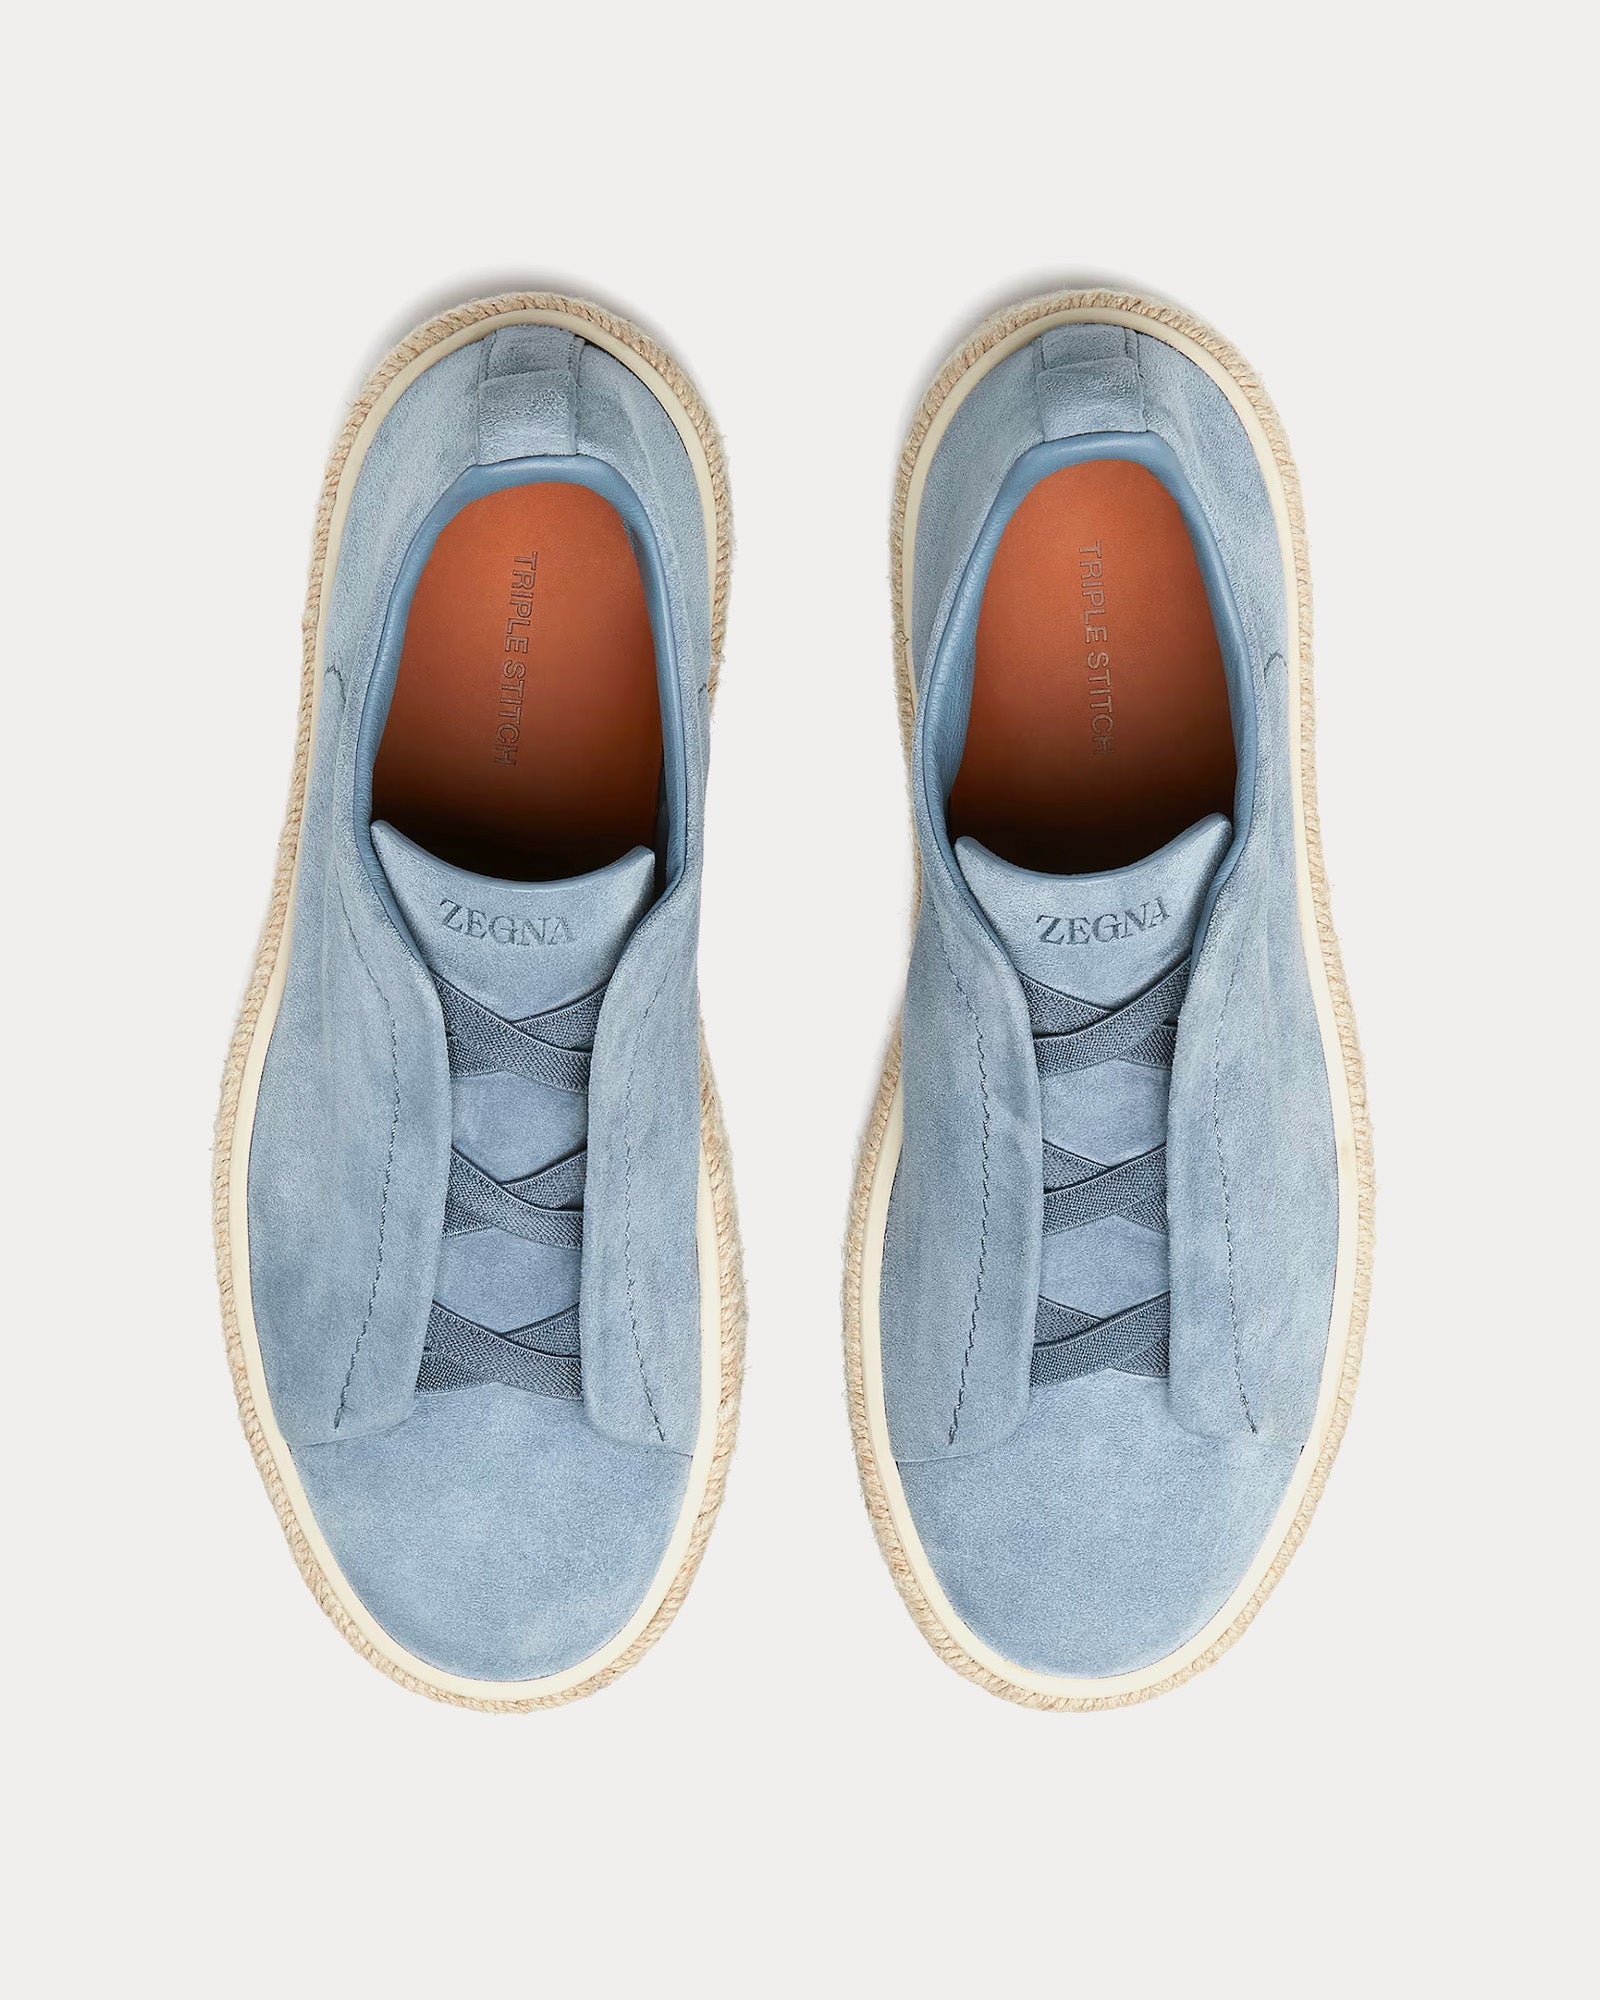 Zegna - Triple Stitch Espadrilles Deerskin Utility Blue Slip On Sneakers